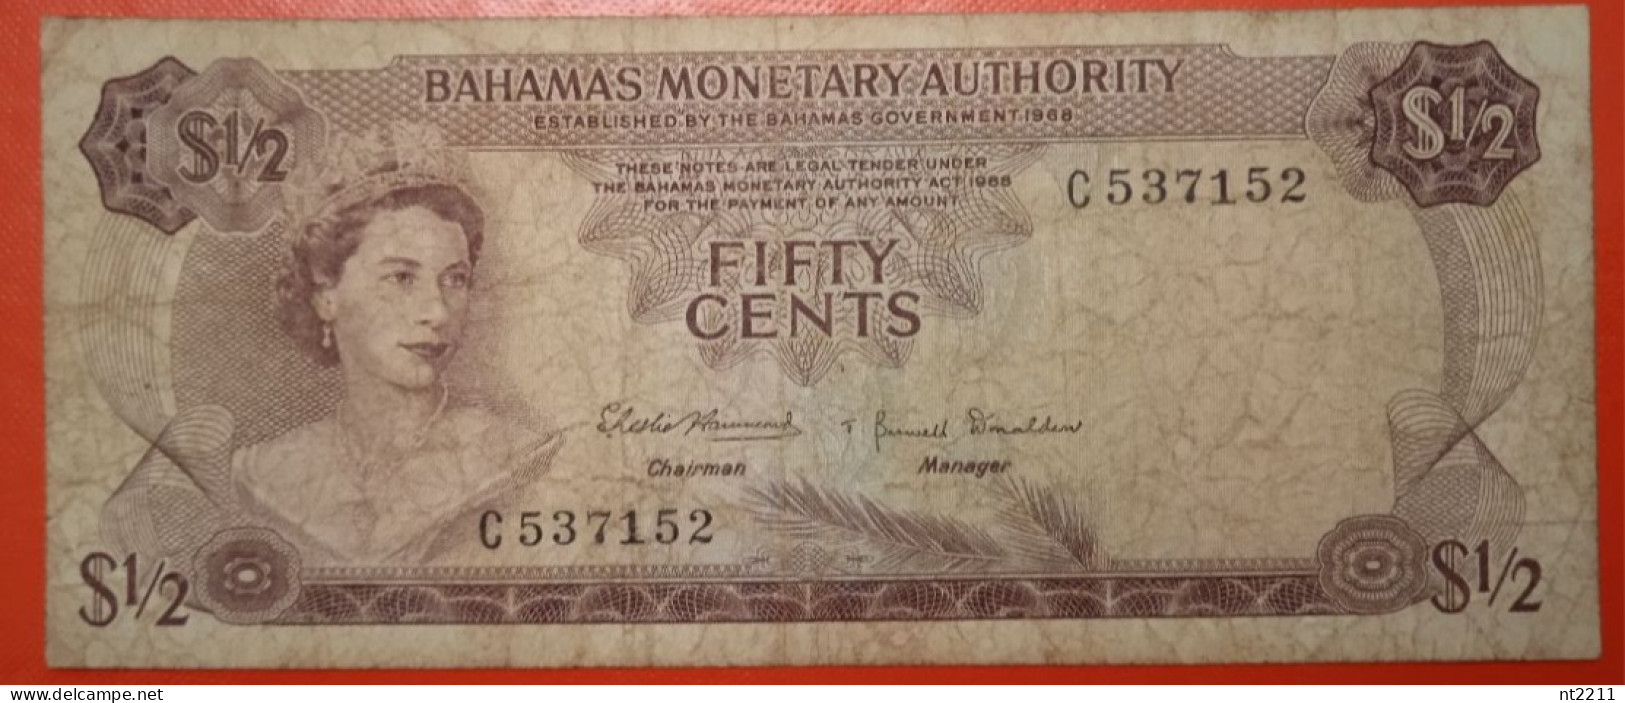 Banknote 1/2 Dollar Bahamas 1968 - Bahama's